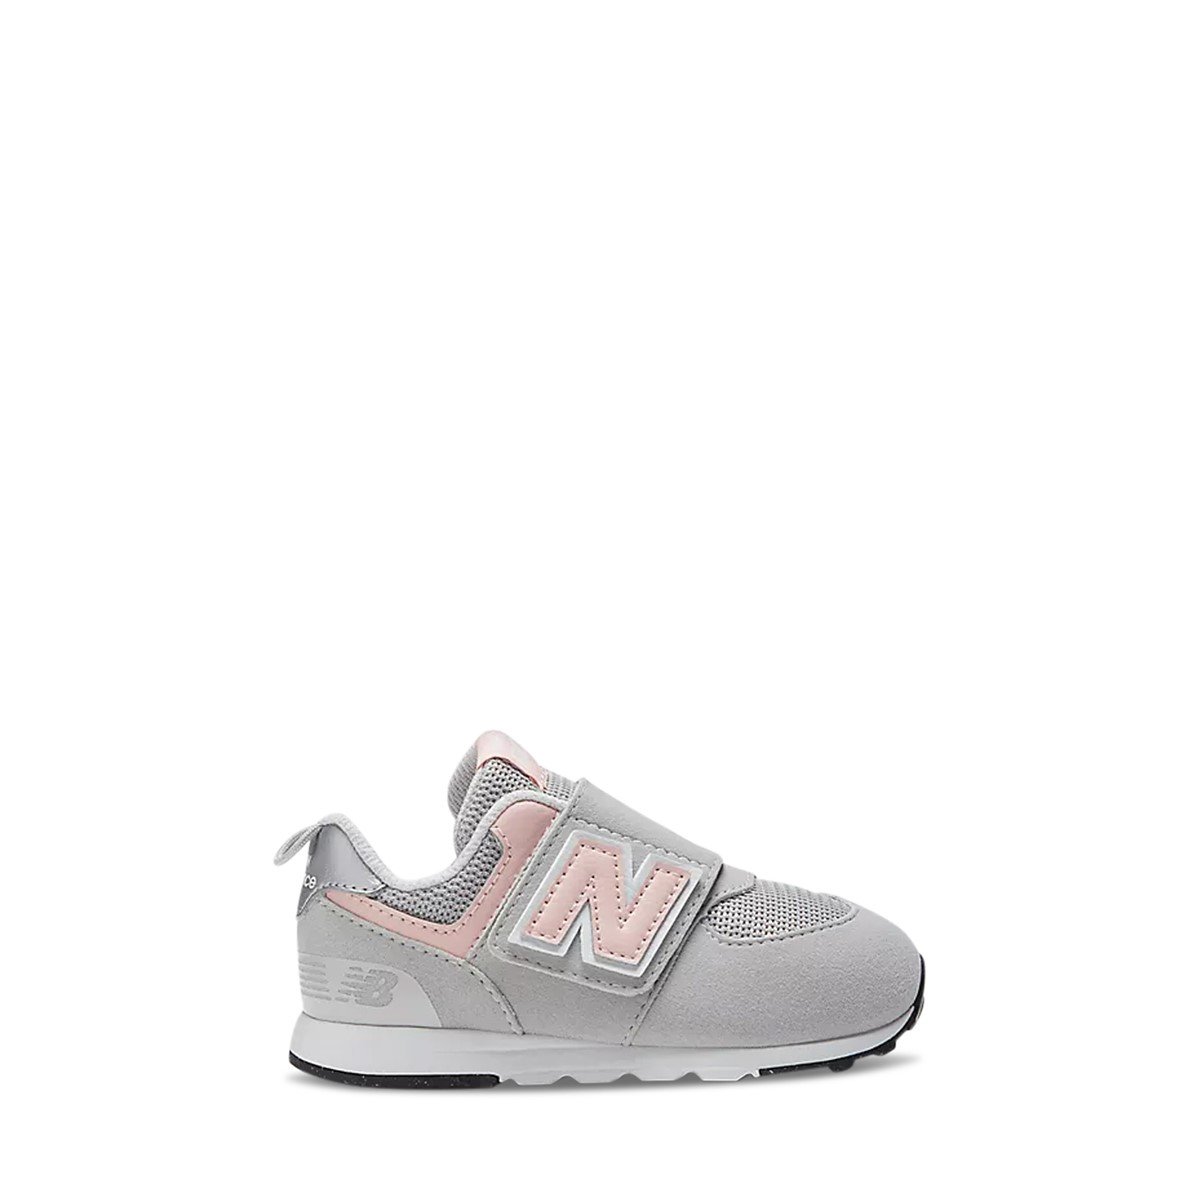 Toddler's 574 Sneakers in Grey/Pink